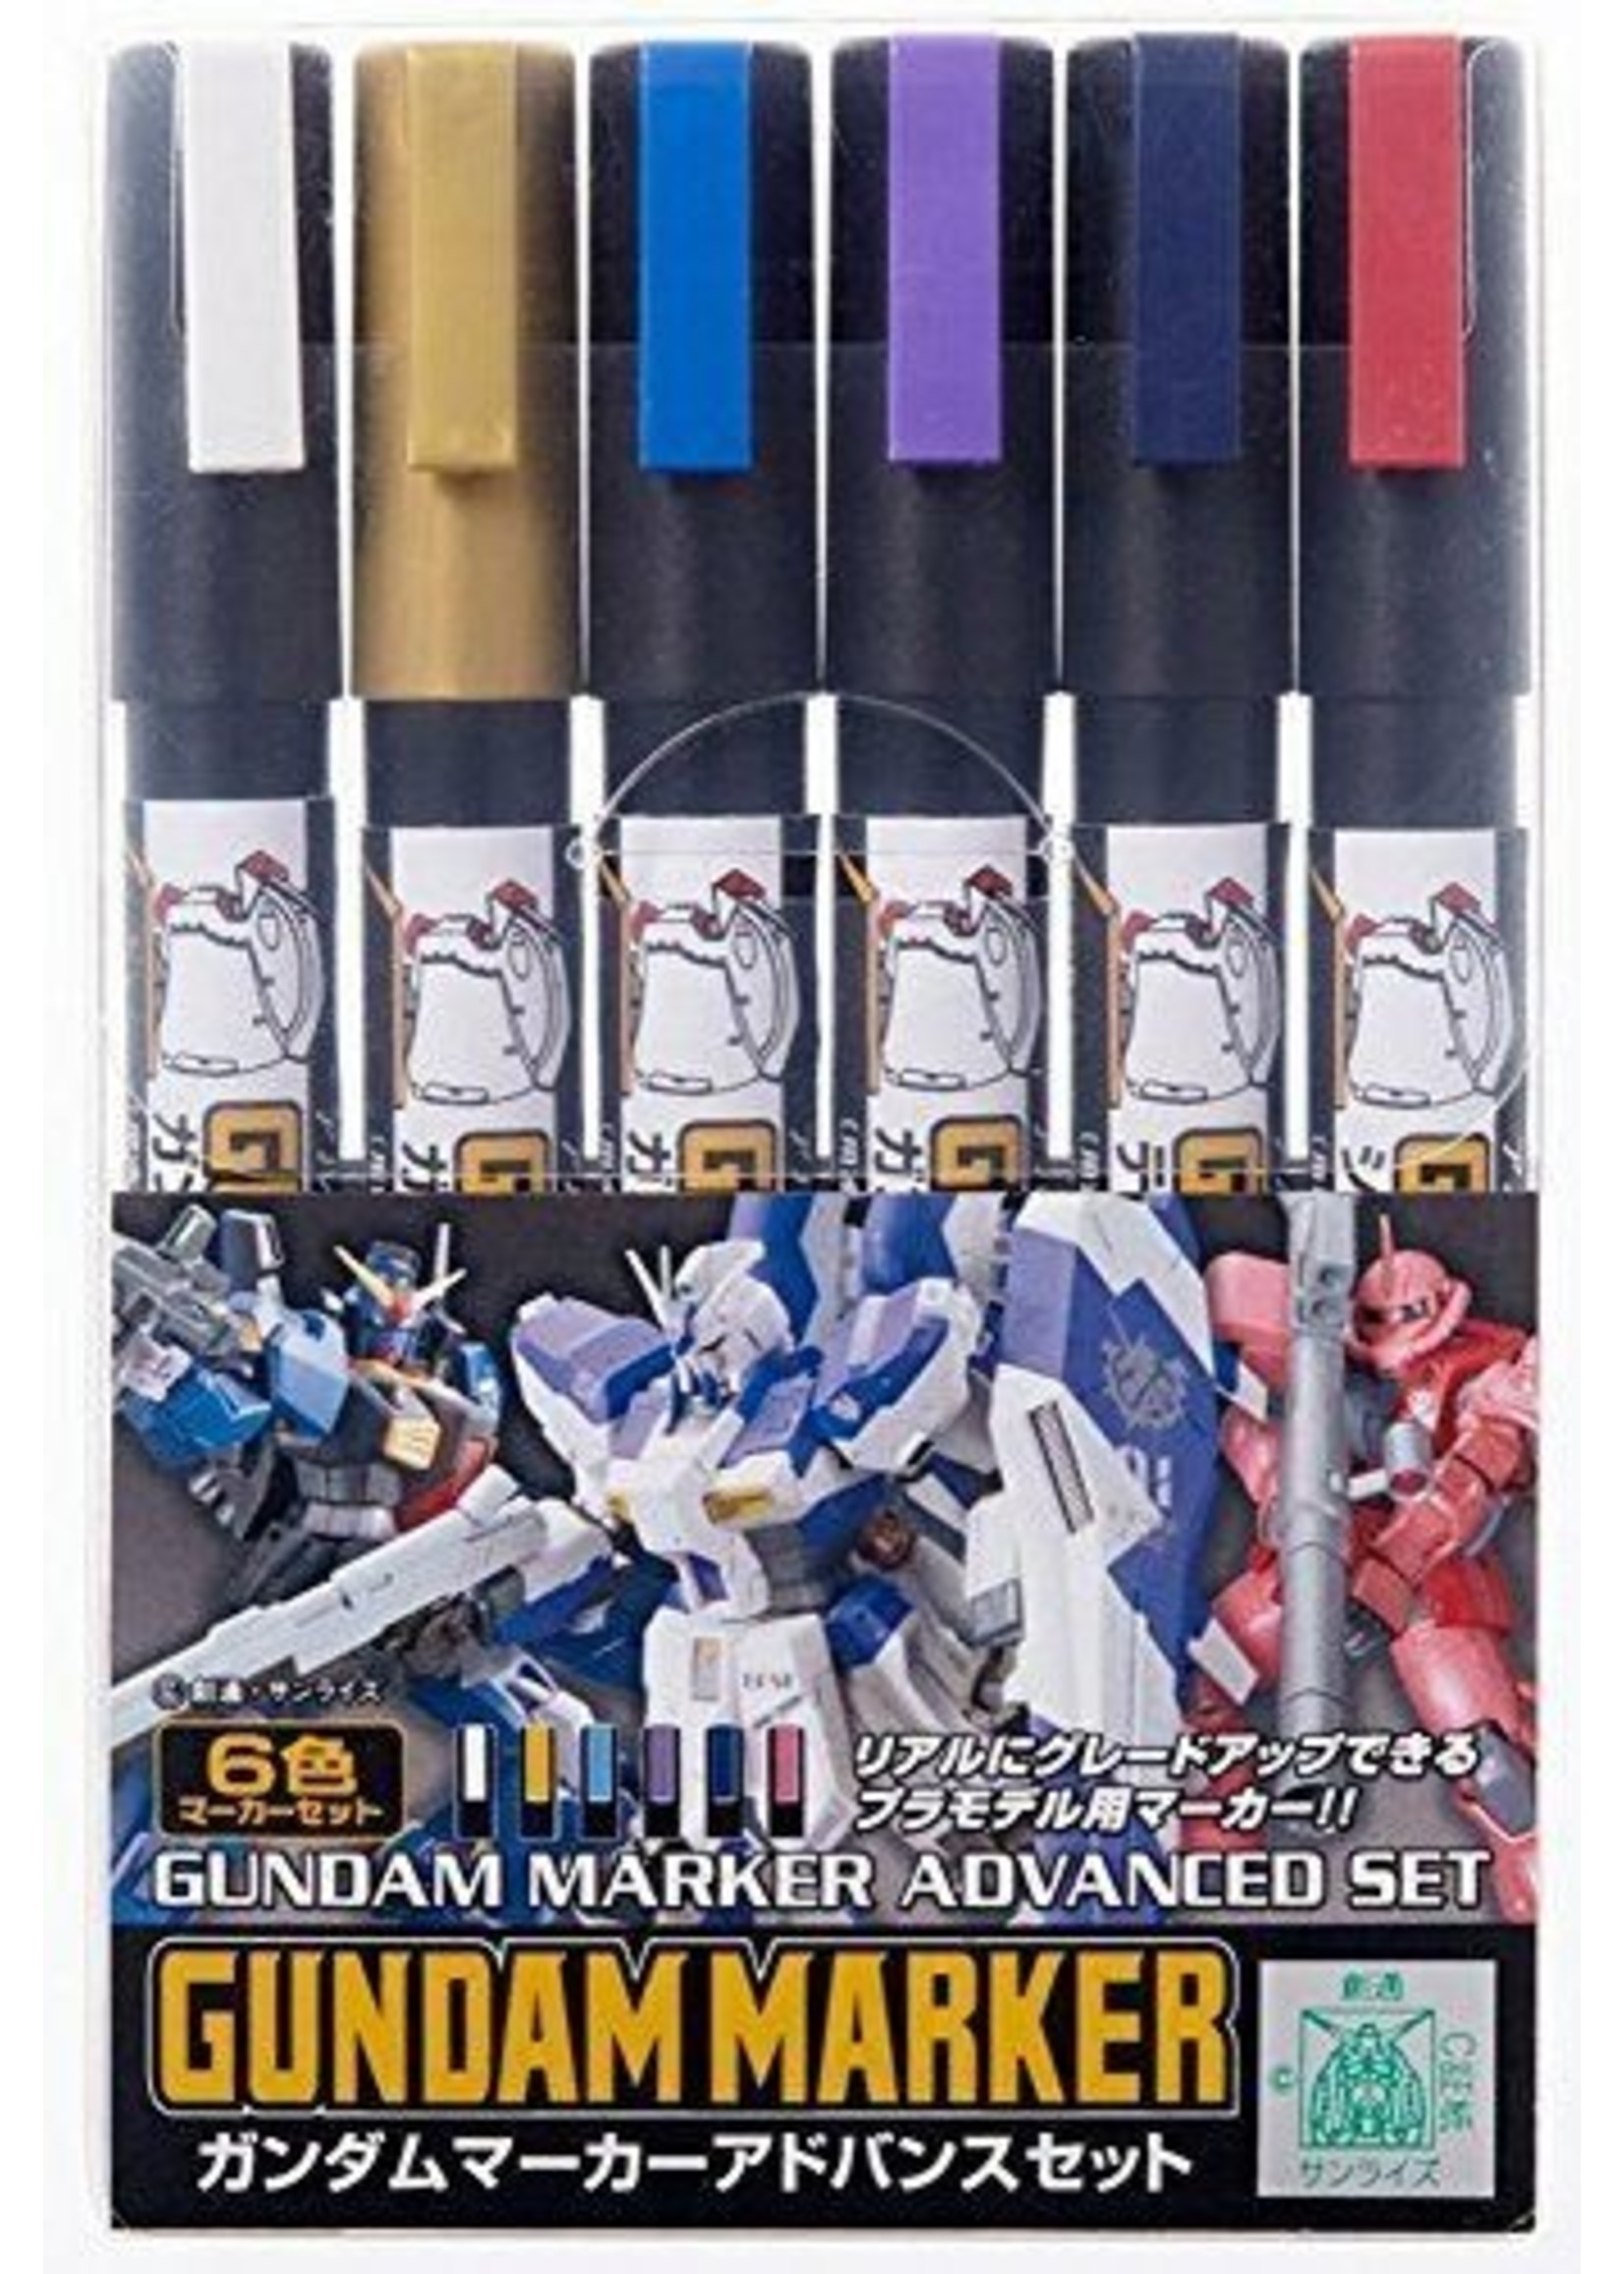 Gundam Markers – Gundam Shoppers Network